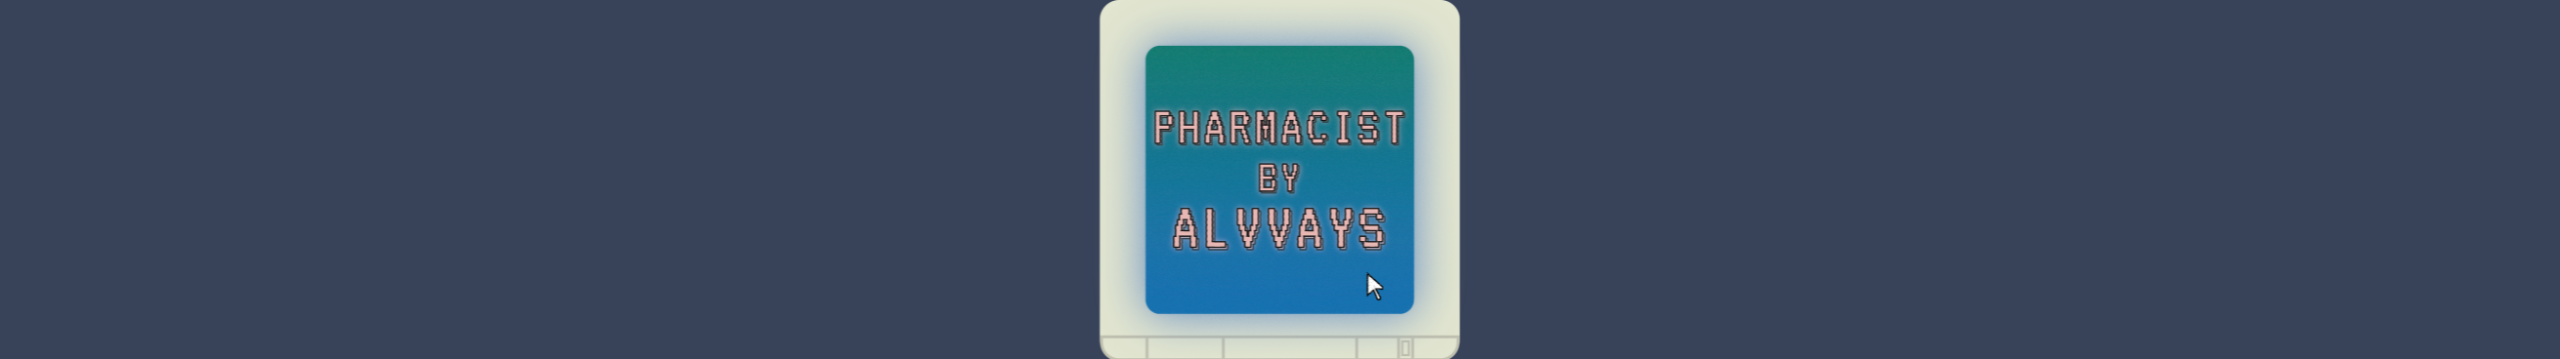 Pick of the Week: Alvvays “Pharmacist”